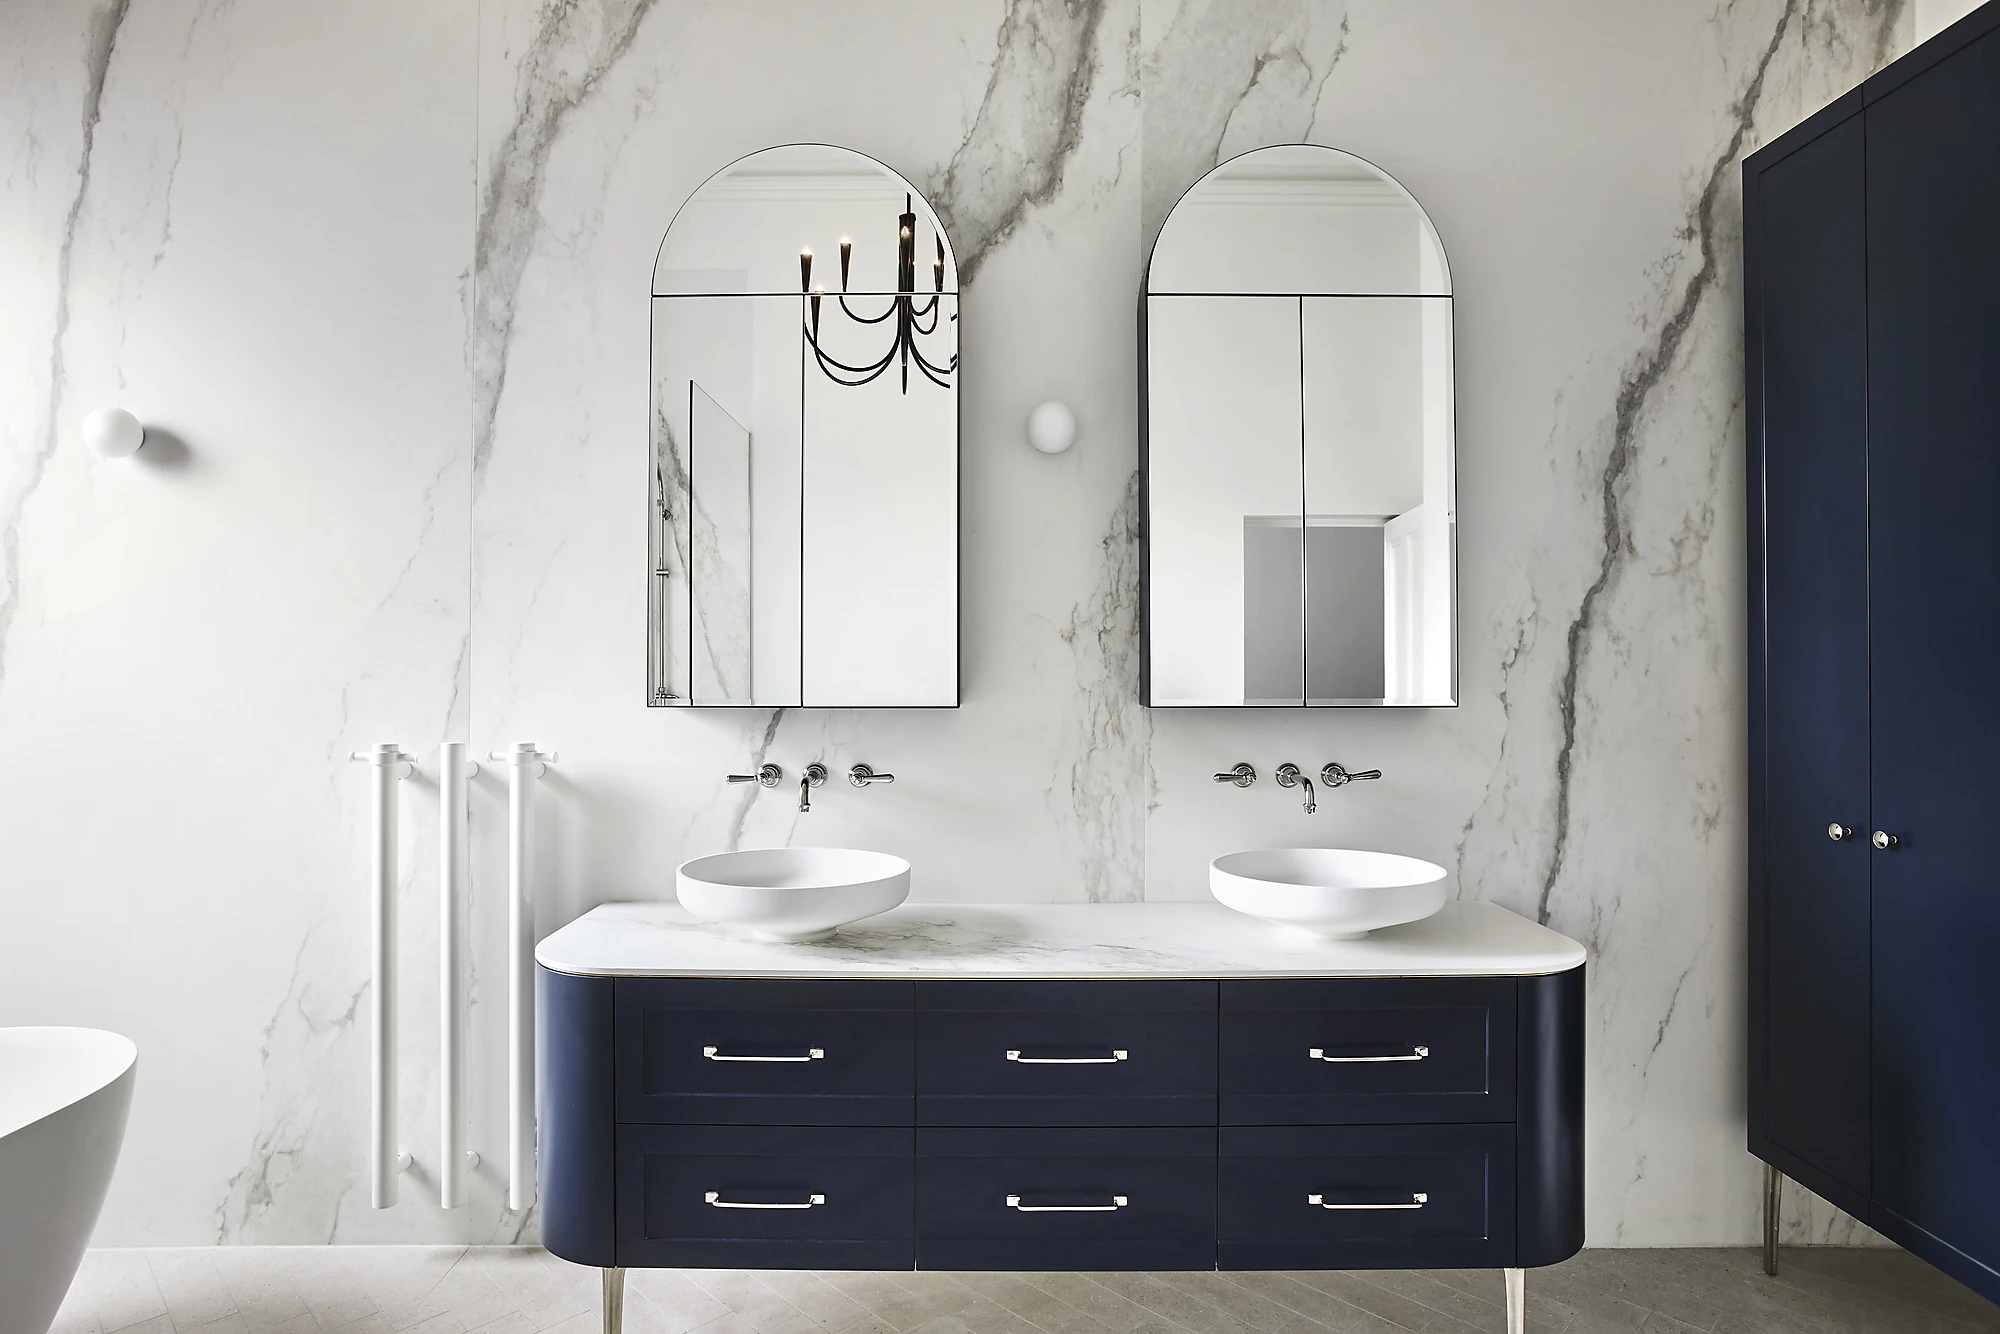 White marble bathroom. Dual sinks on vanity with blue drawers, 